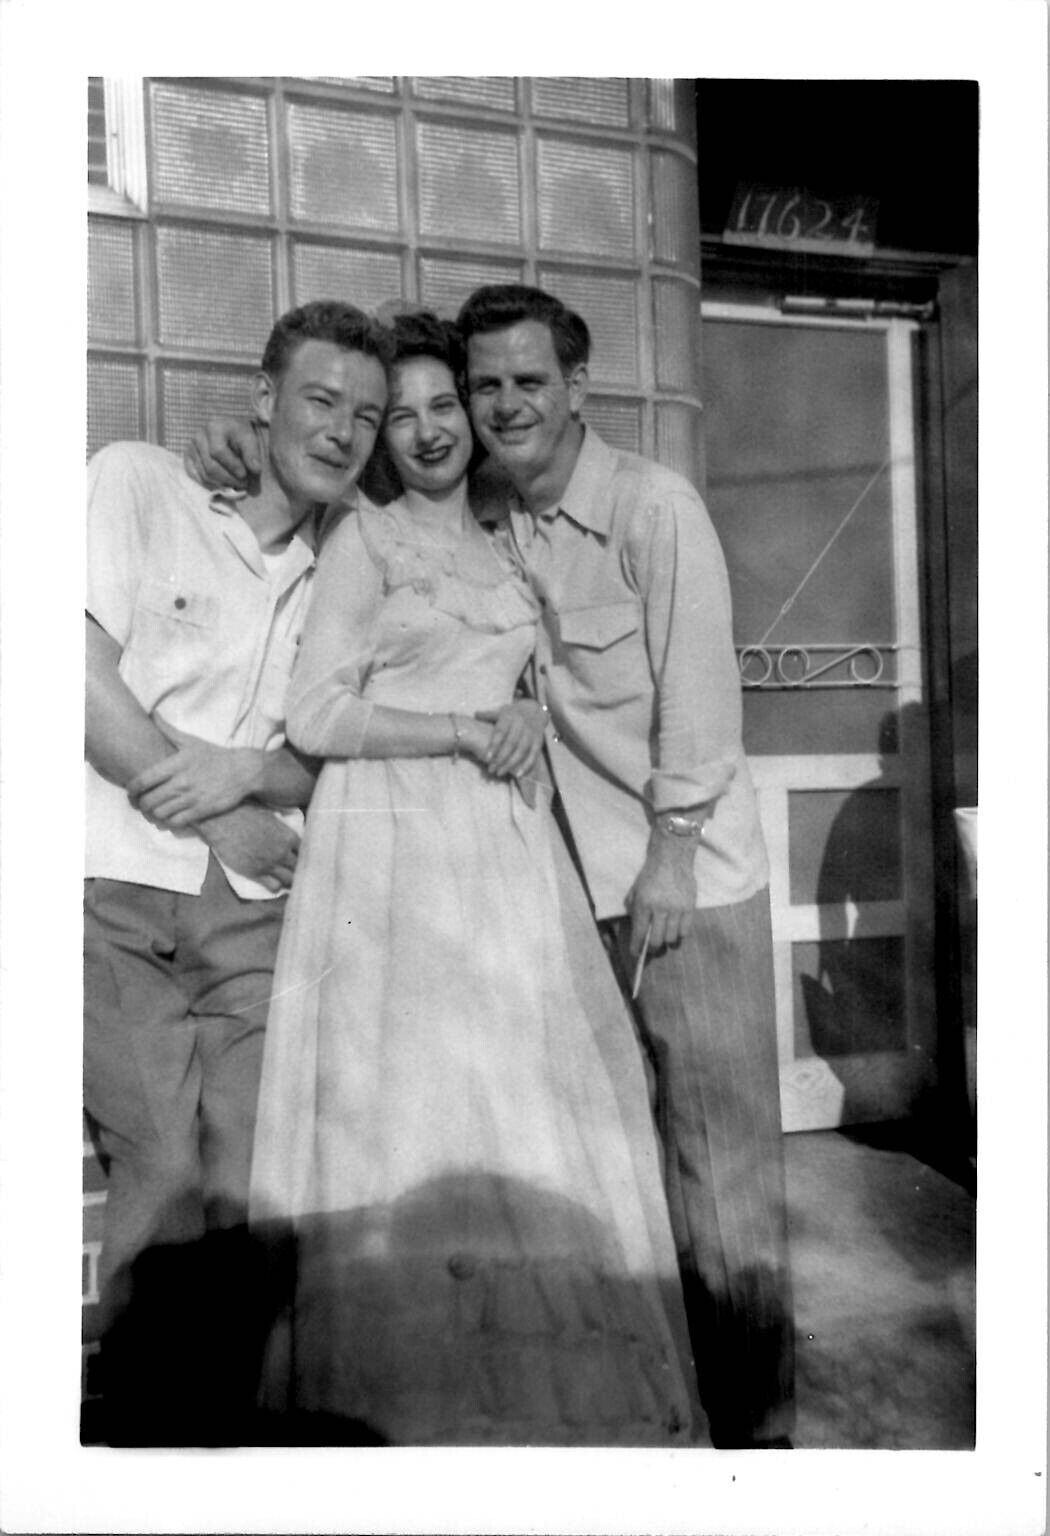 ENM FLAMBOYANT THROUPLE LOVERS HAVING FUN ~ 1940s VINTAGE GAY PHOTOGRAPH